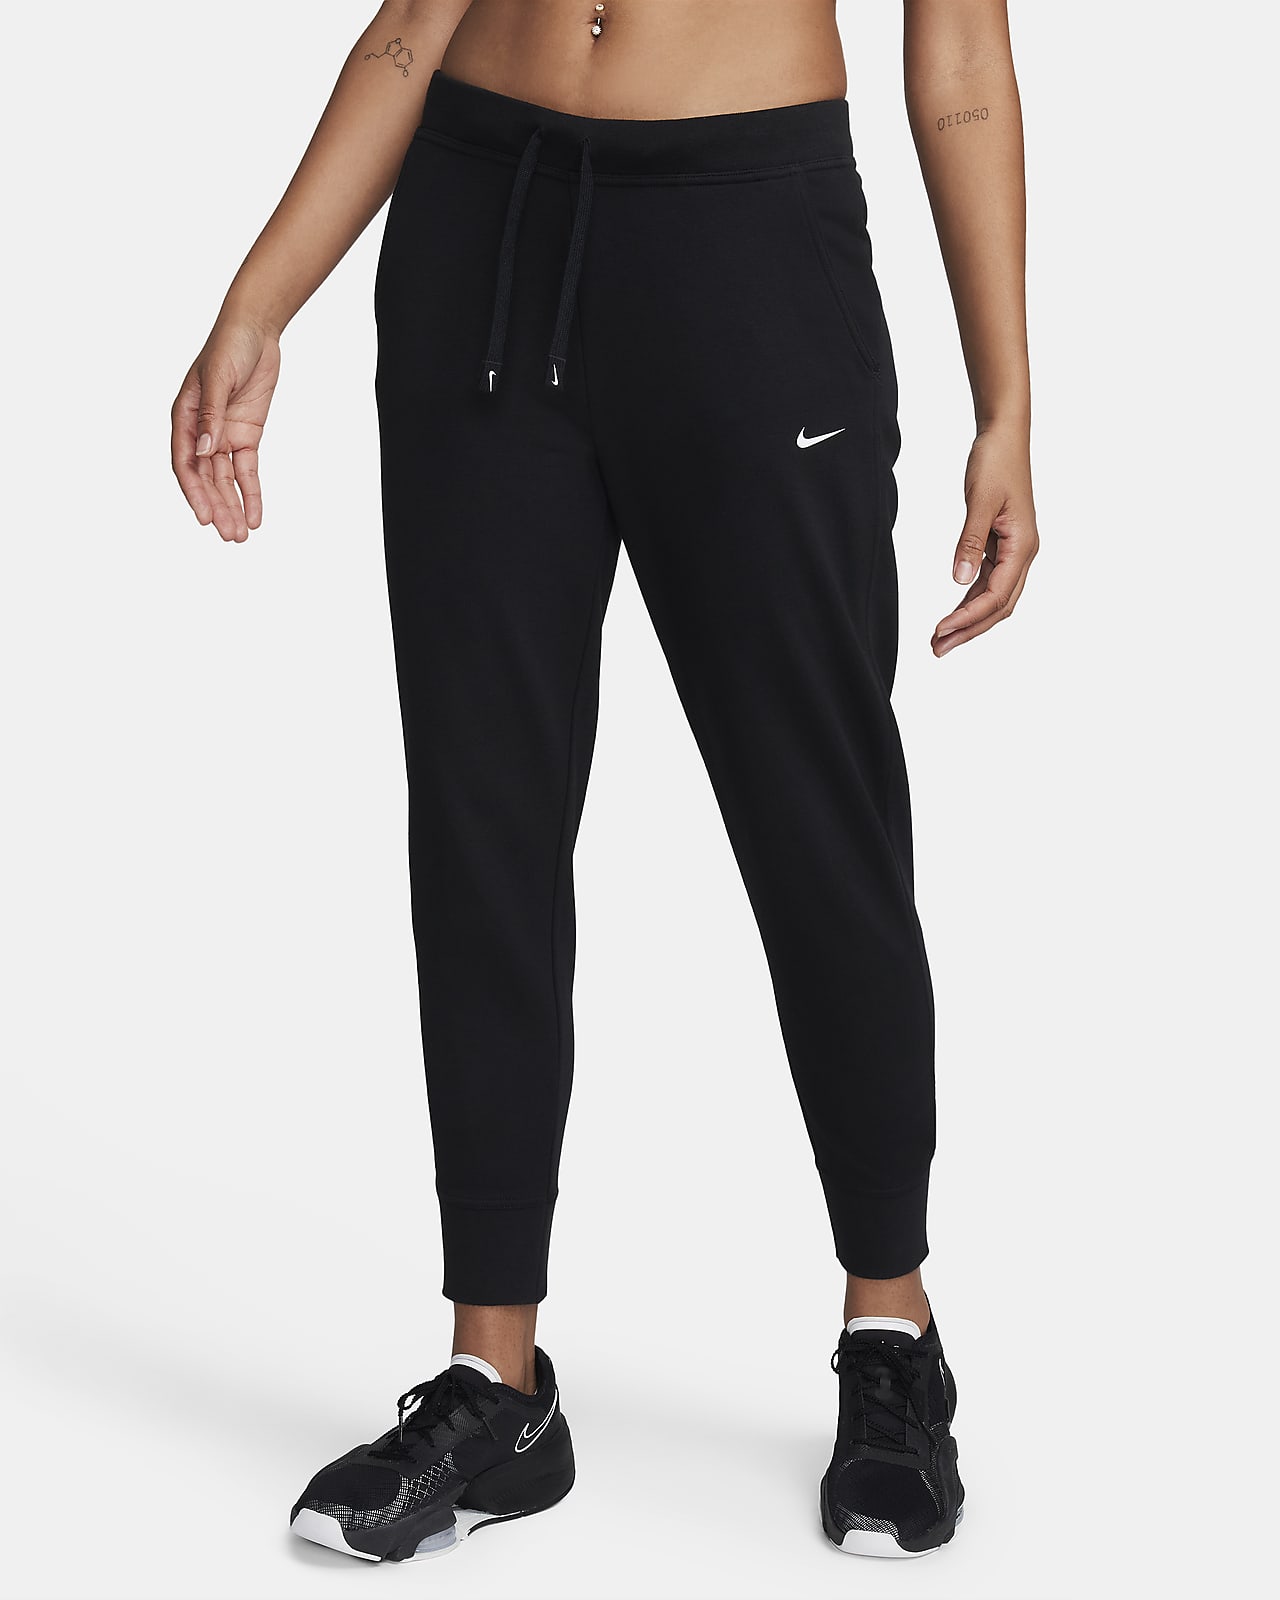 Nike Dri-FIT Get Fit Kadın Antrenman Eşofman Altı